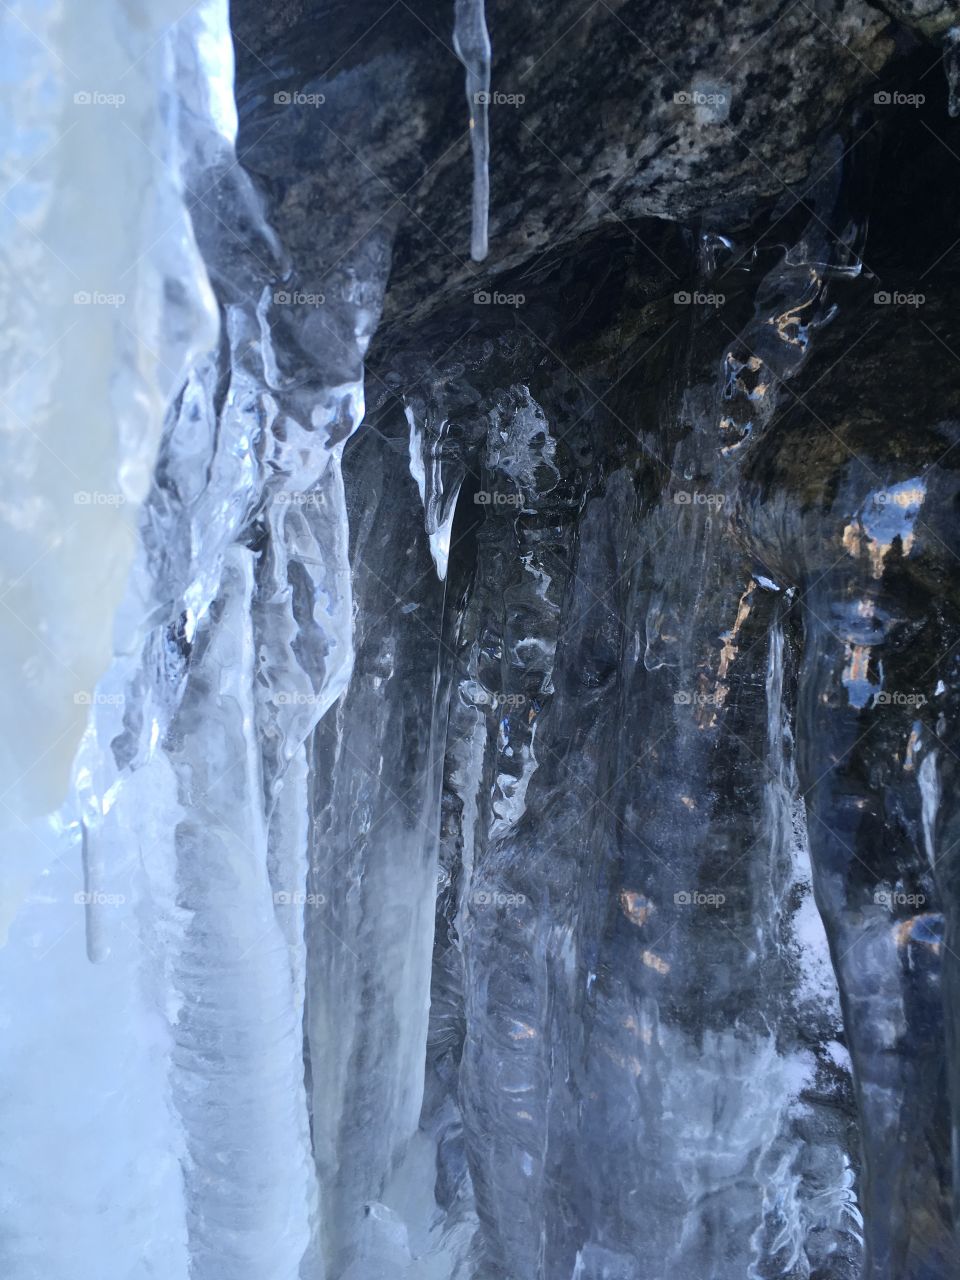 Icy rock close up